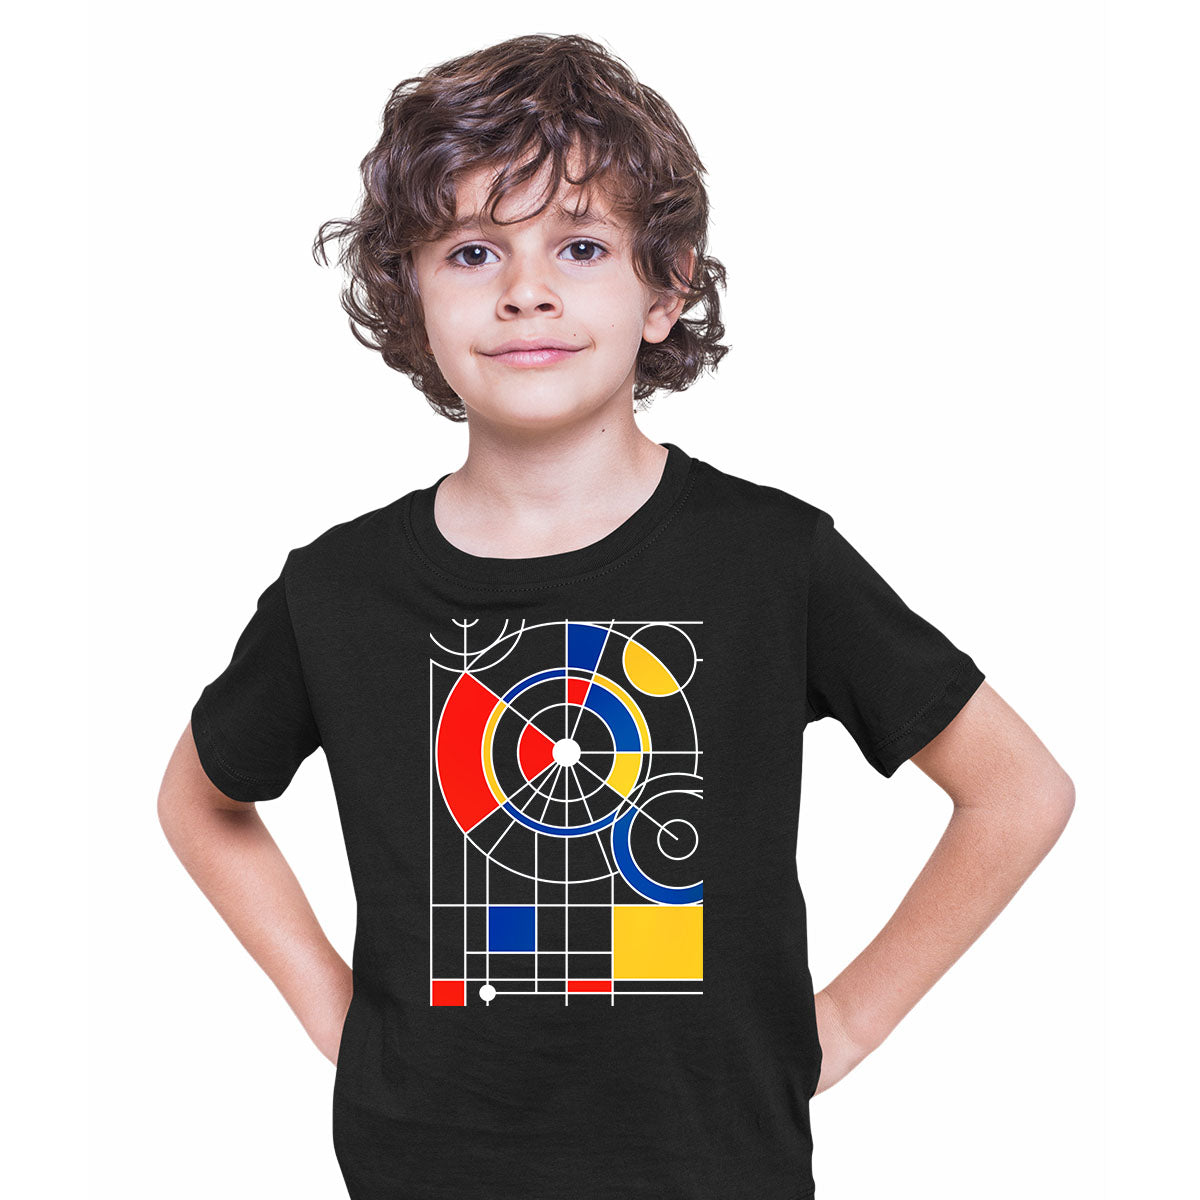 Steampunk Mechanic Art Tee Typography T-shirt for Kids - Kuzi Tees